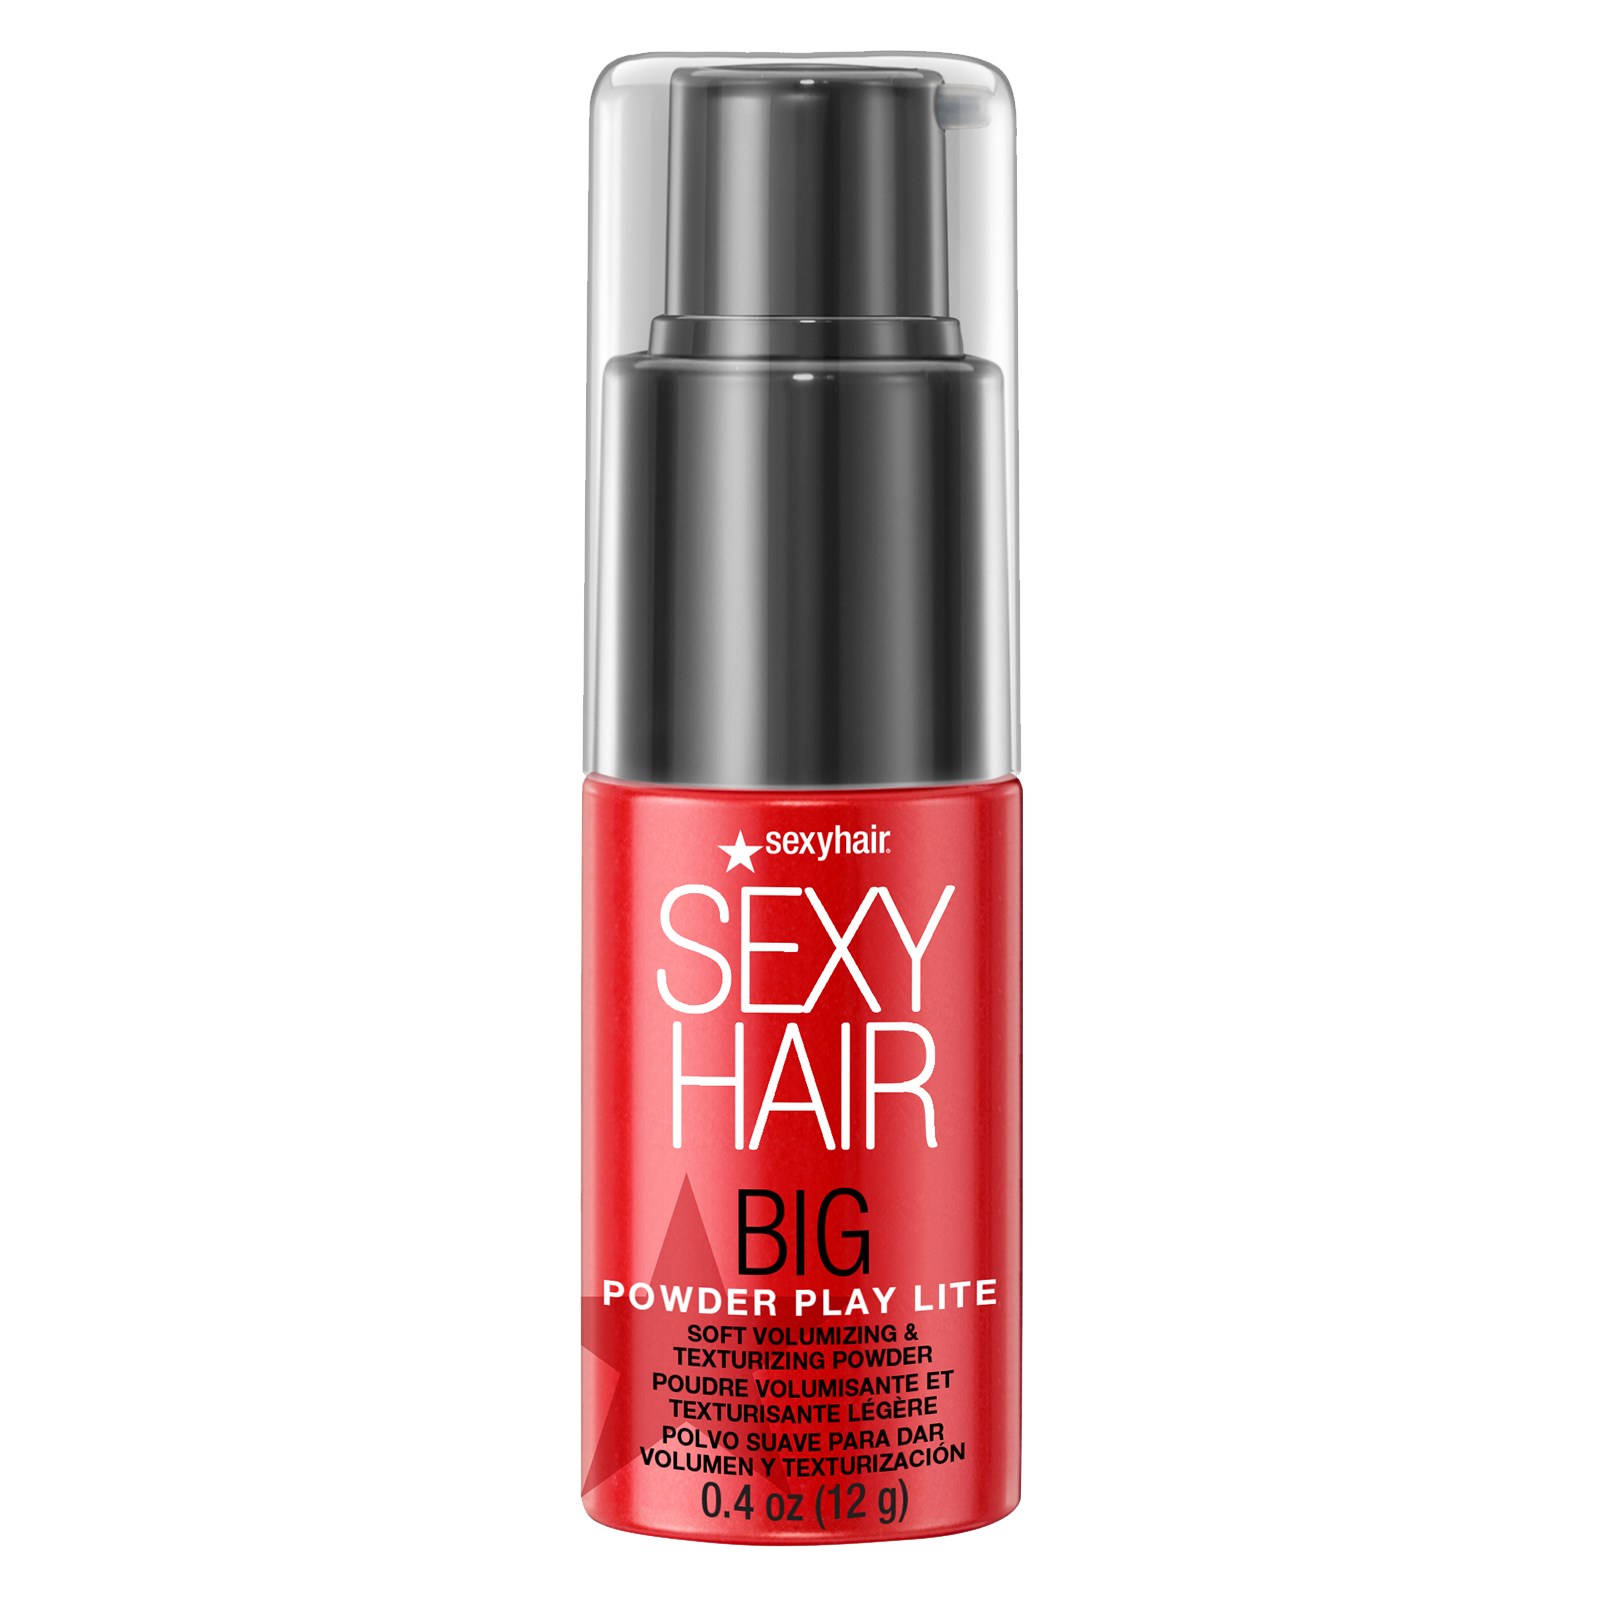 Sexyhair Big Sexyhair Big Powder Play Lite 15 g